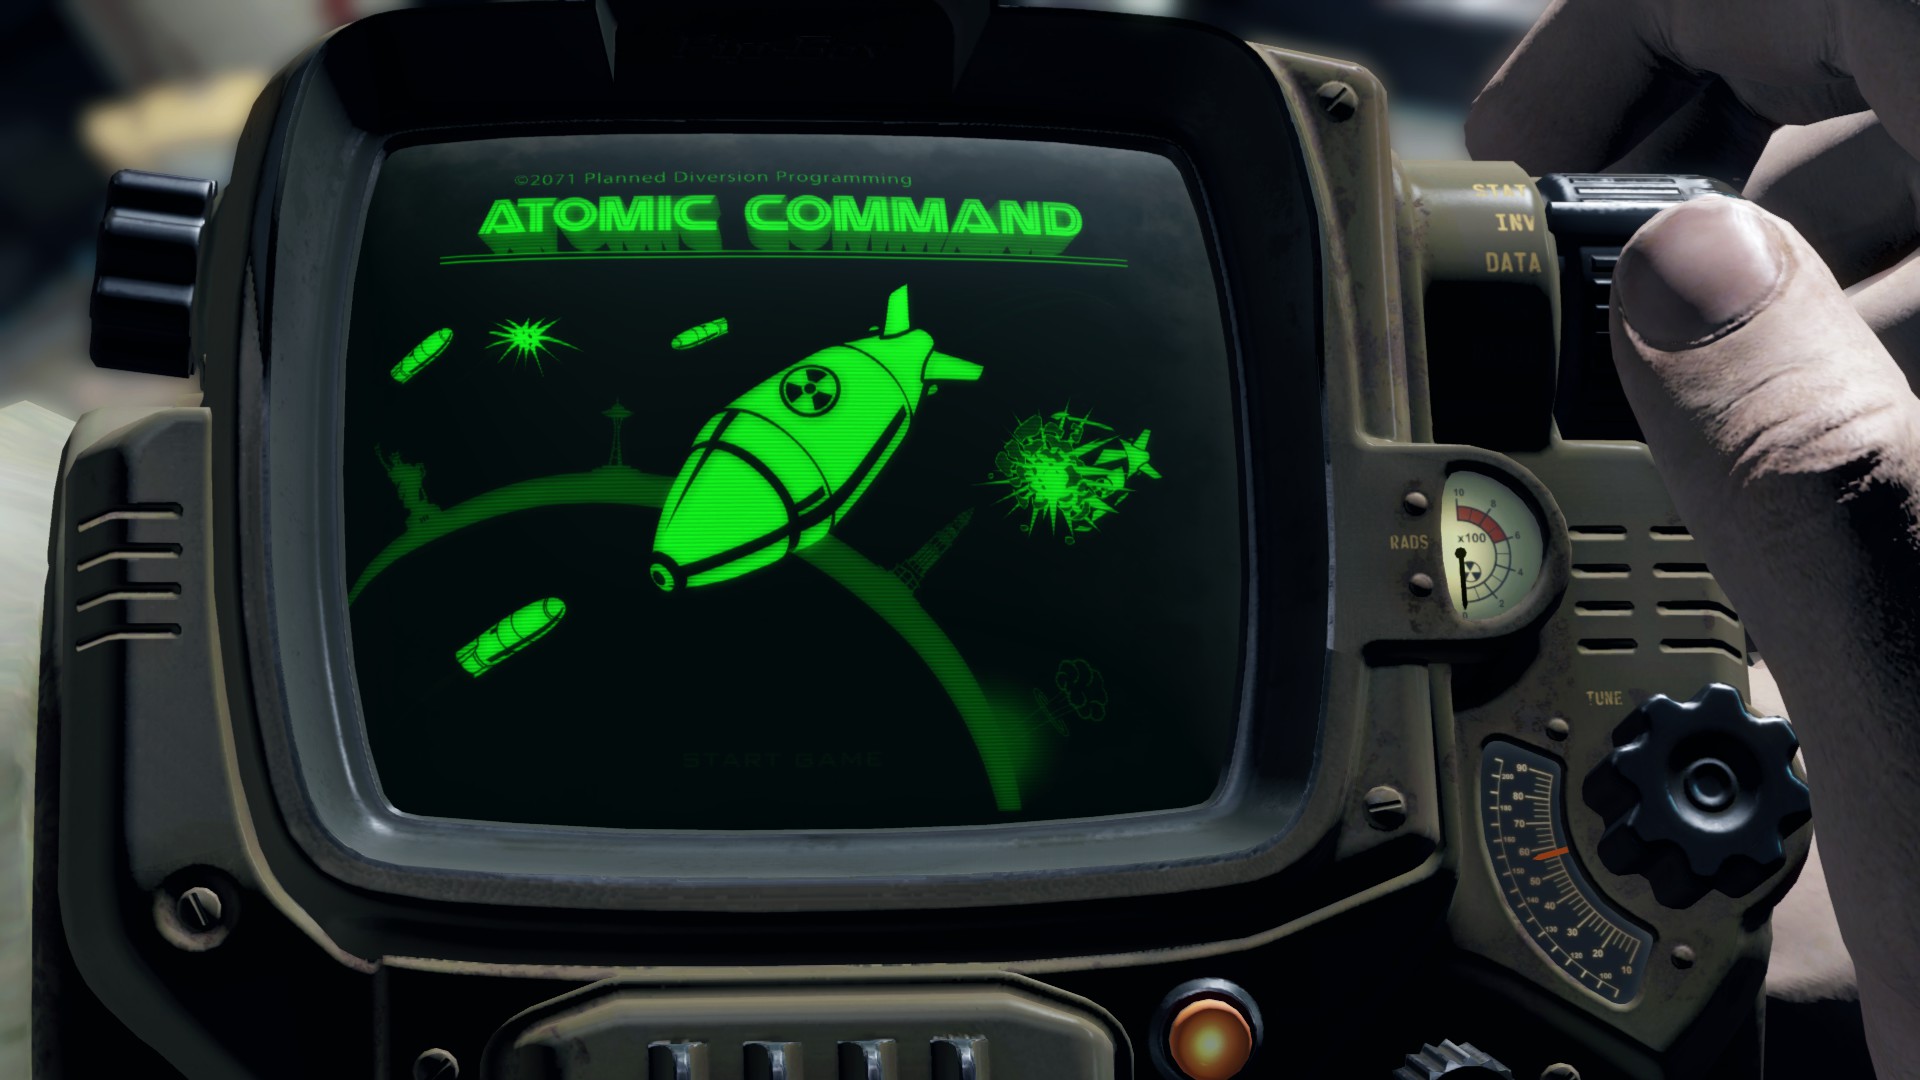 Command items. Atomic Command Fallout 4. Fallout 4 Pip boy. Приборы фоллаут. Pipboy казино.